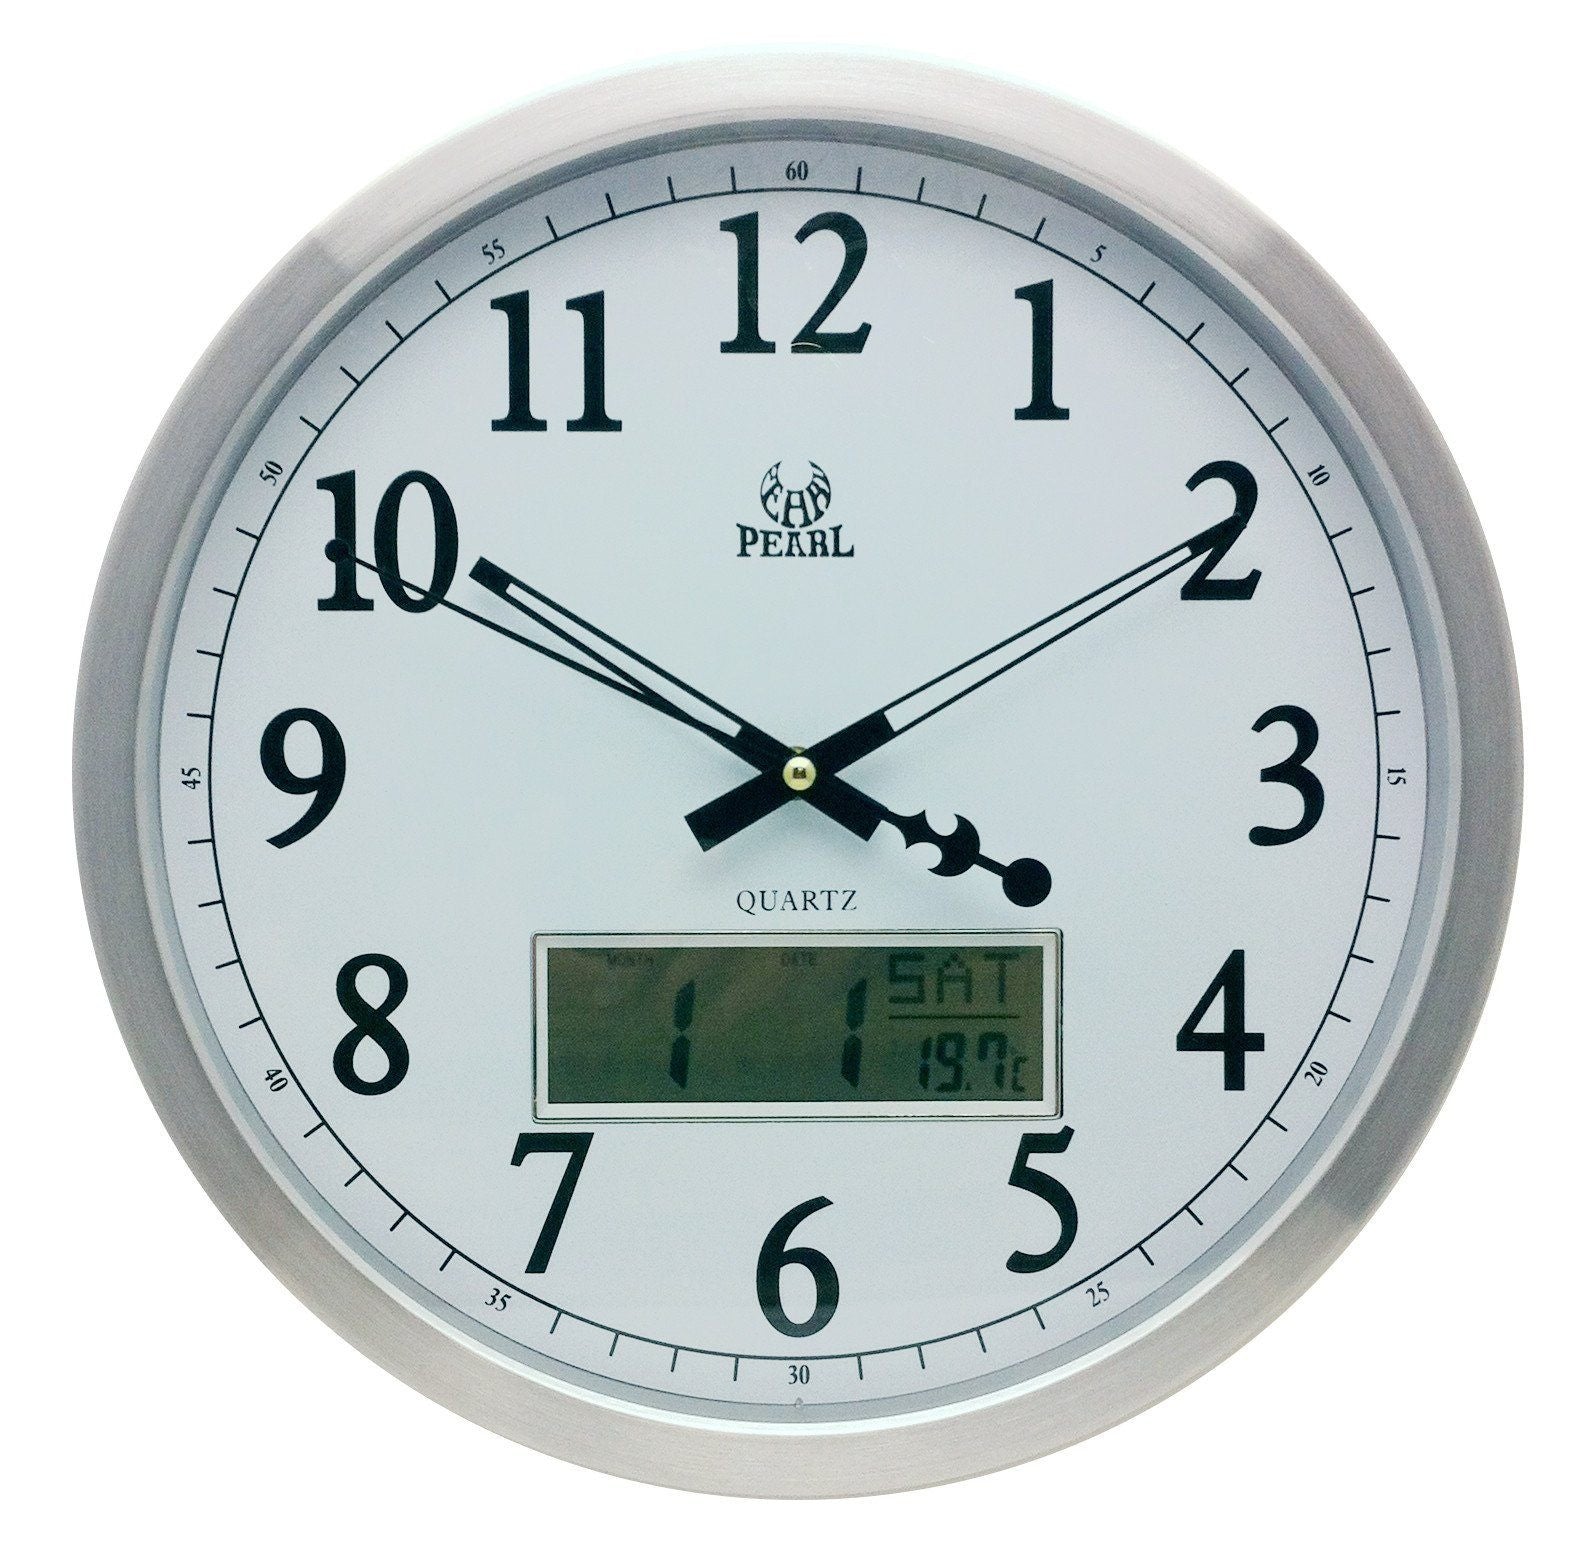 digital wall timer clock